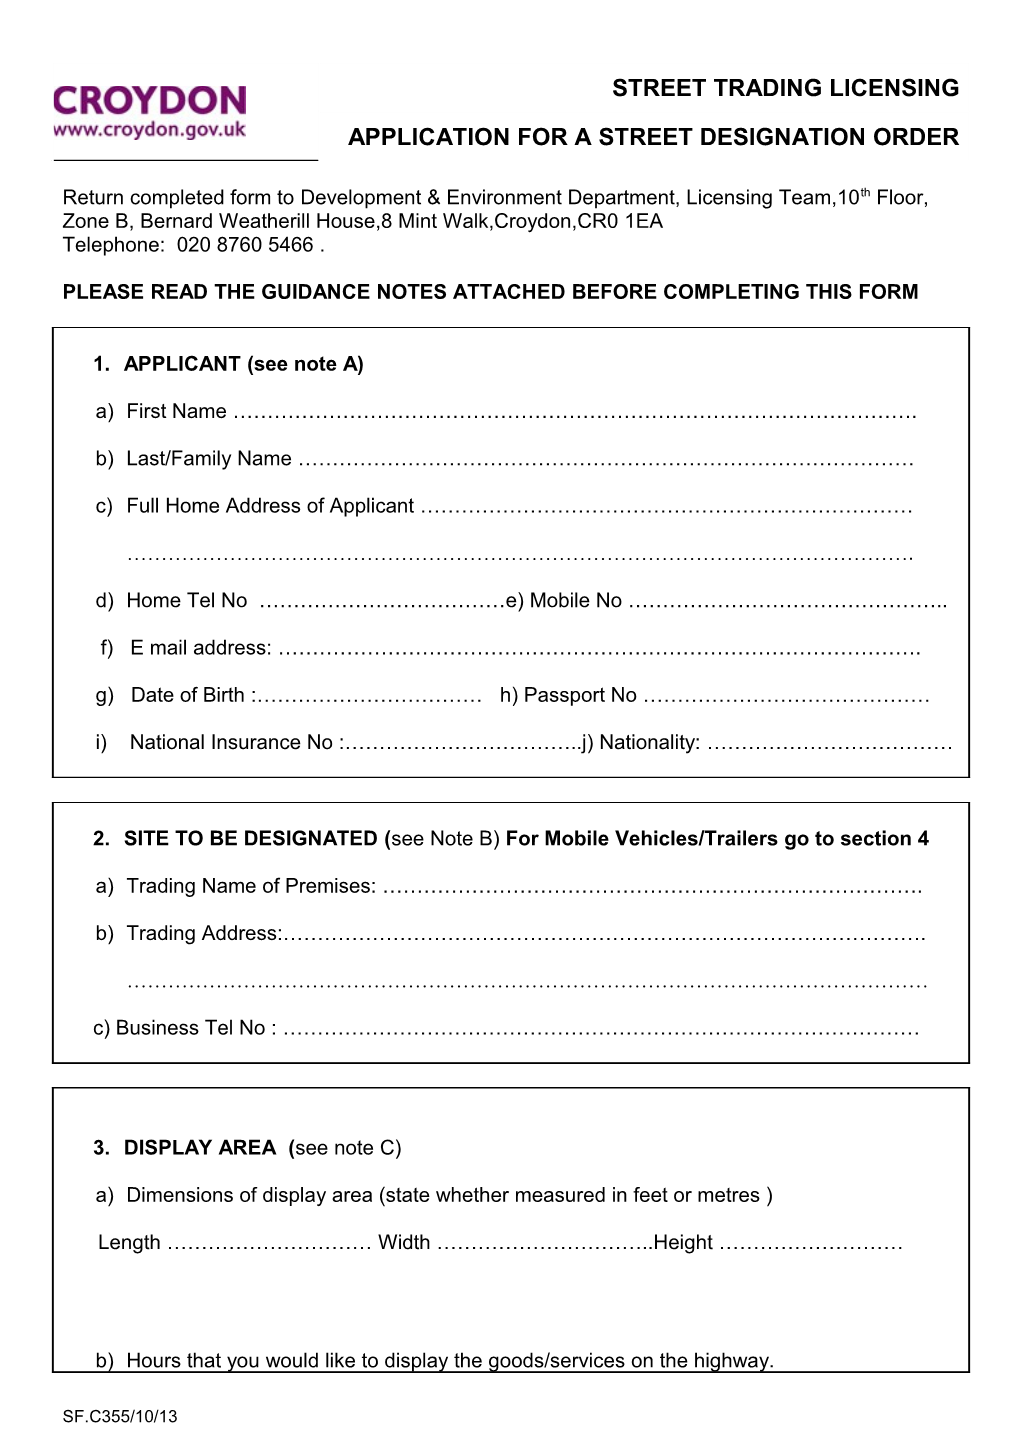 SF.C355 Street Designation Order Application Form